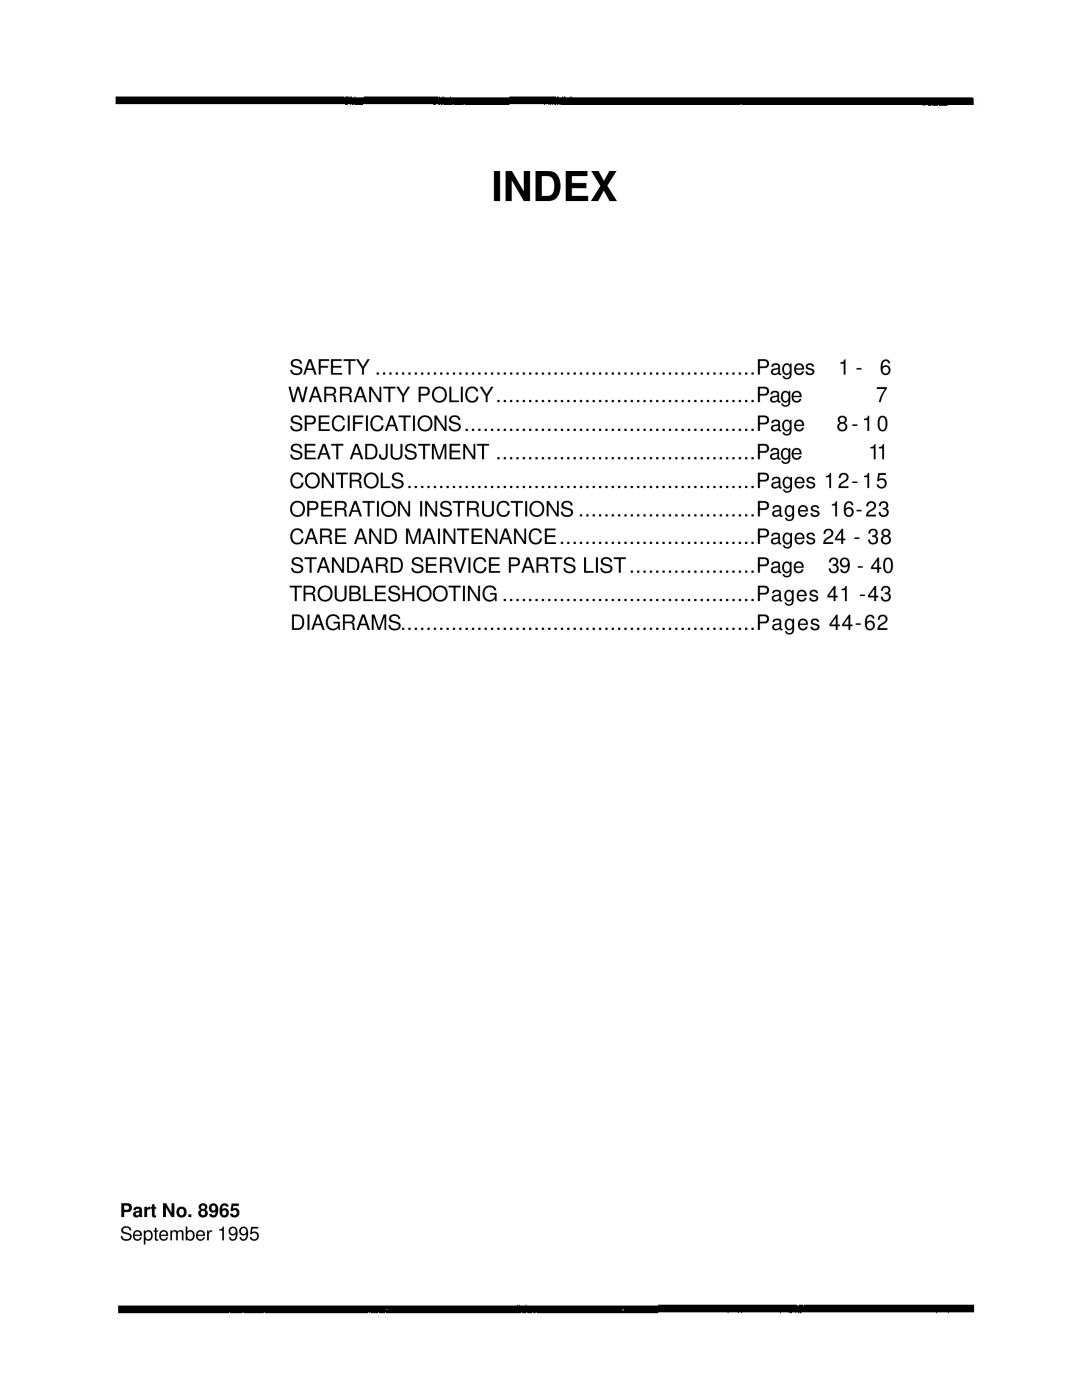 Dixon ZTR 5422, ZTR 5502, ZTR 5601 manual Index, September 